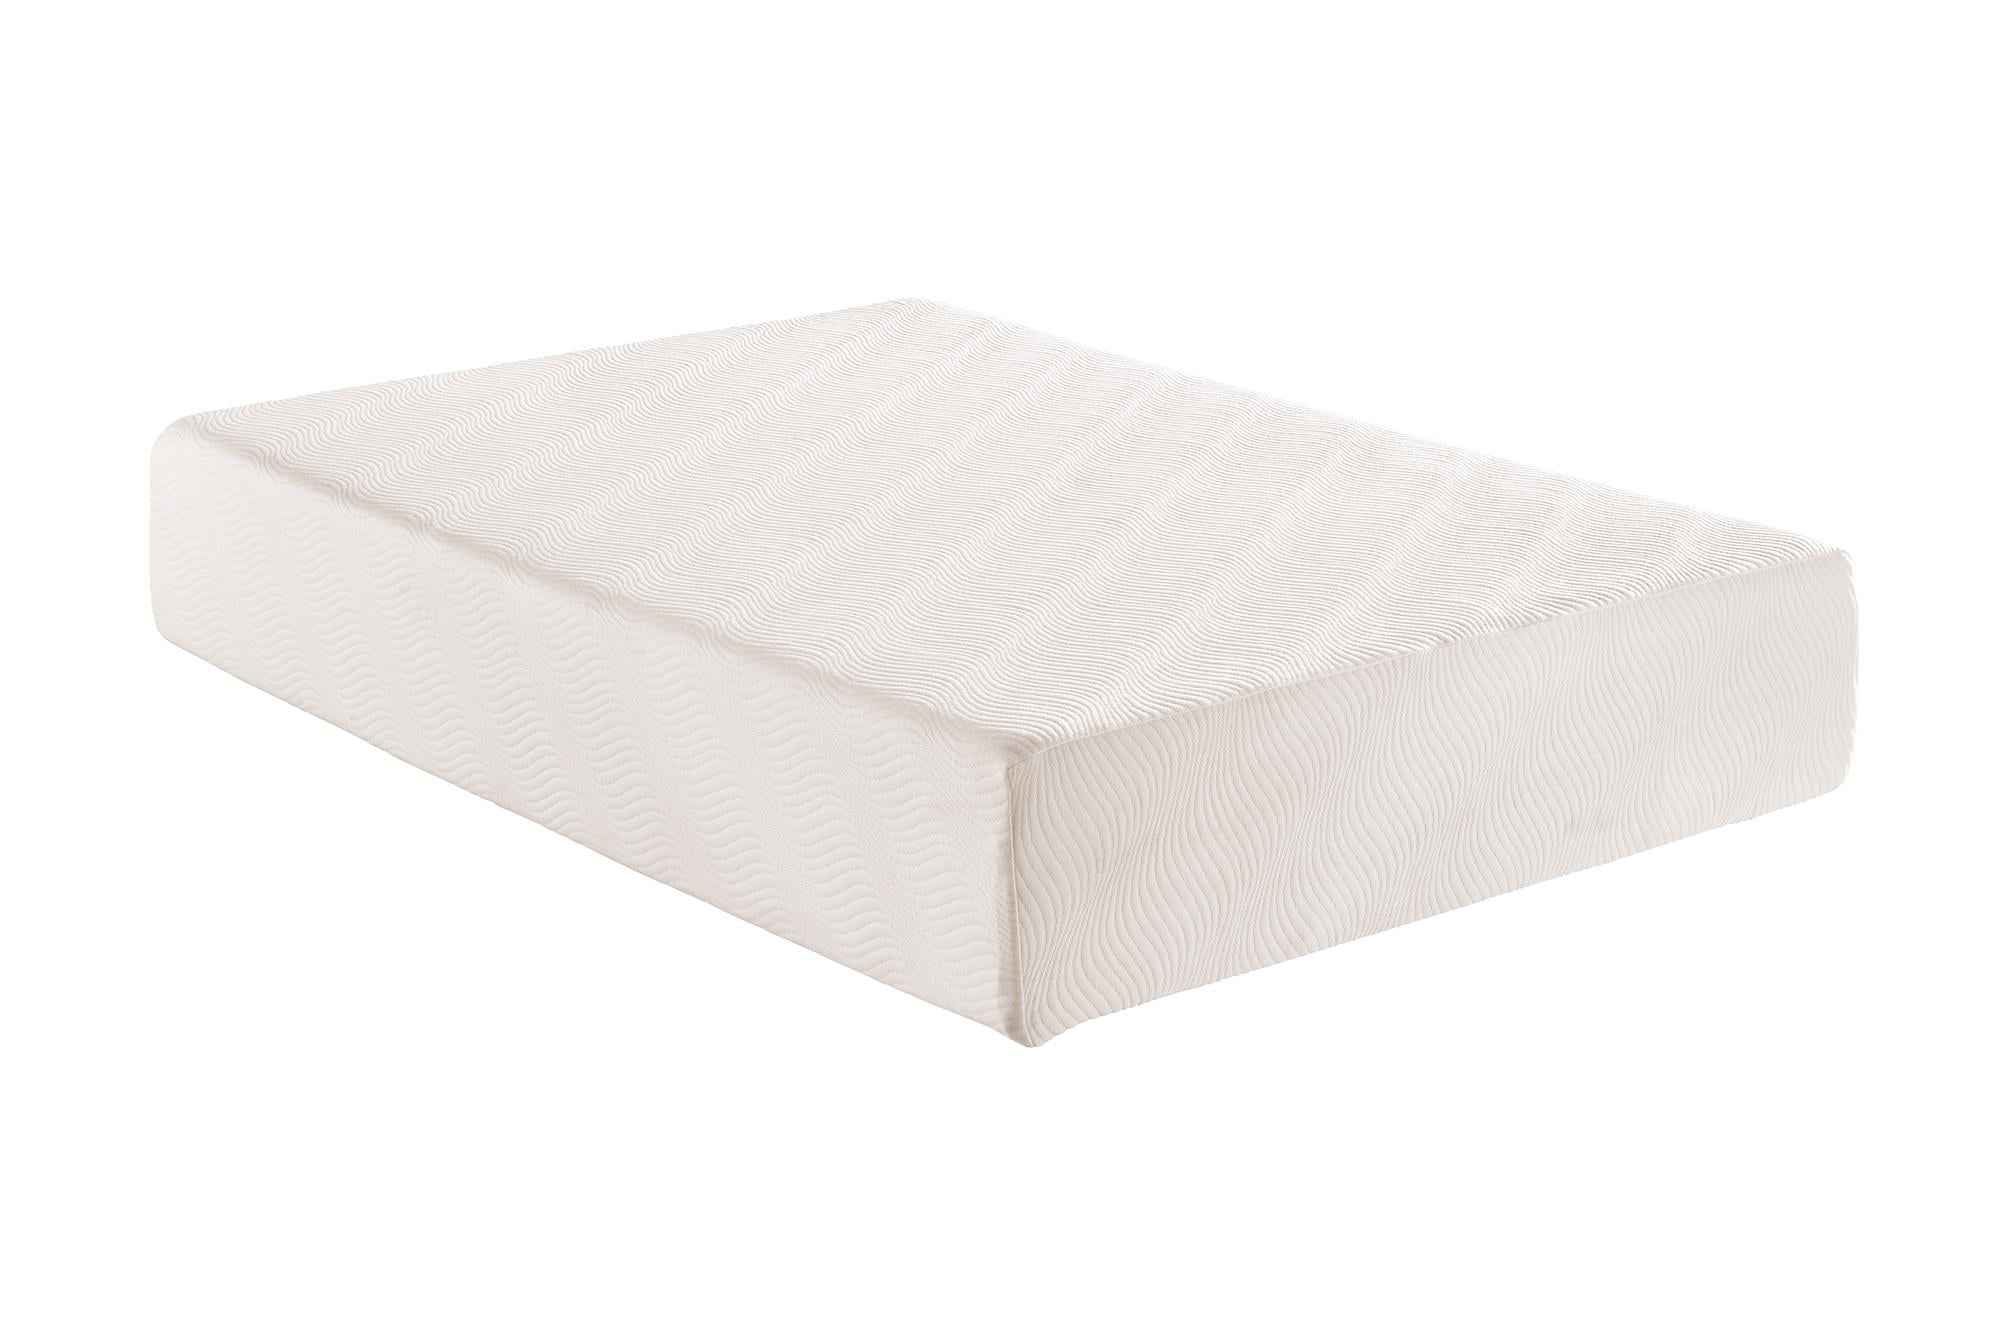 mainstays memory foam mattress instructions